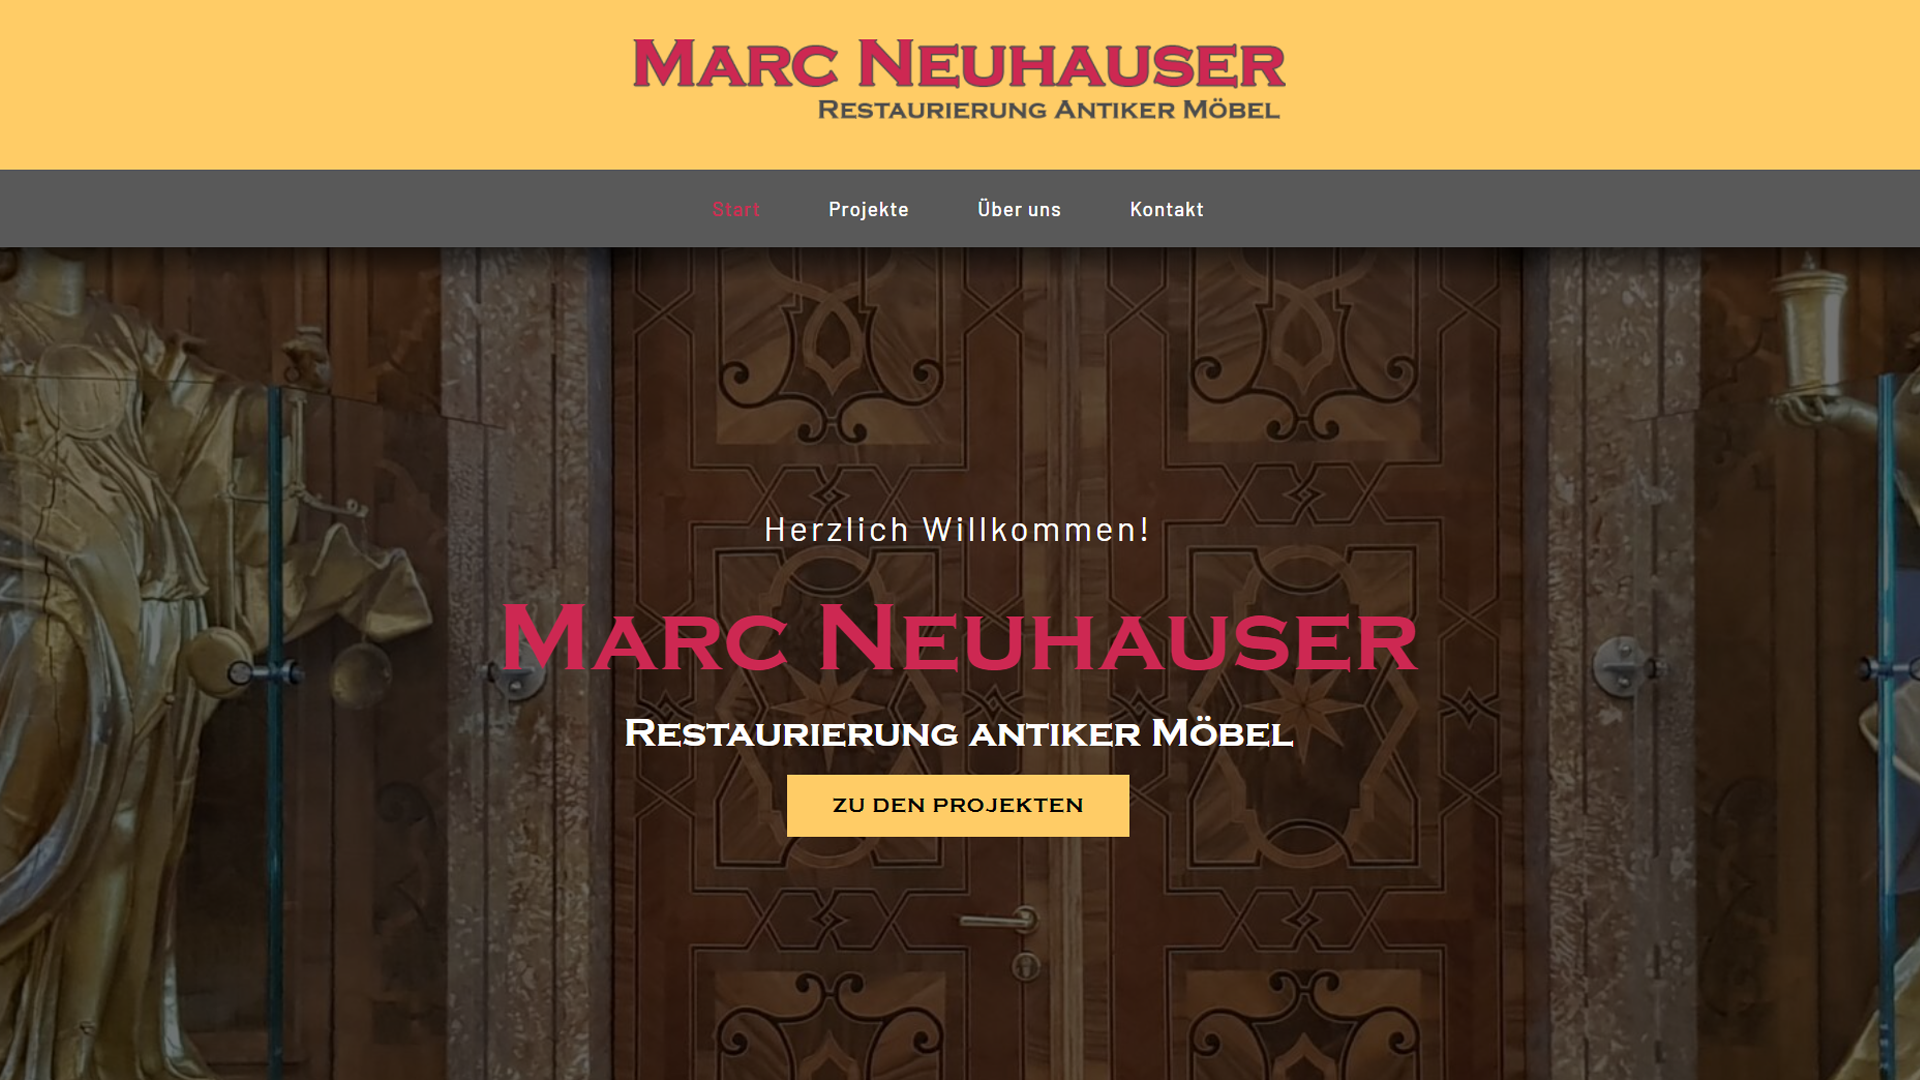 Restaurator Marc Neuhauser